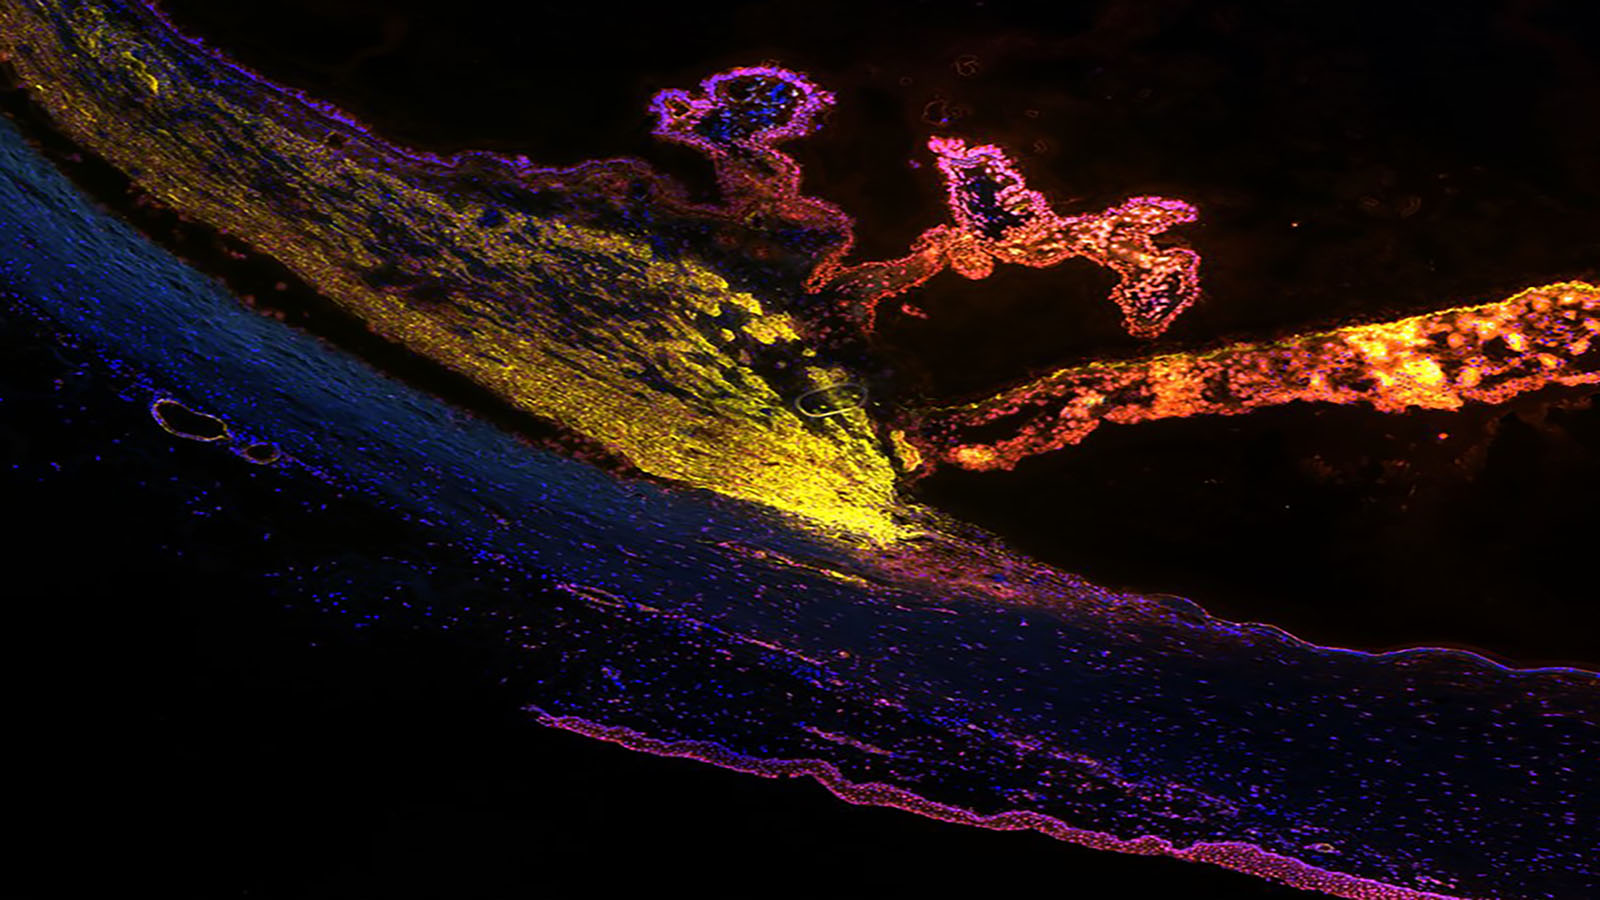 Multiplexed immunofluorescence image of the eye, courtesy of Dr. Angela Kruse of Vanderbilt University